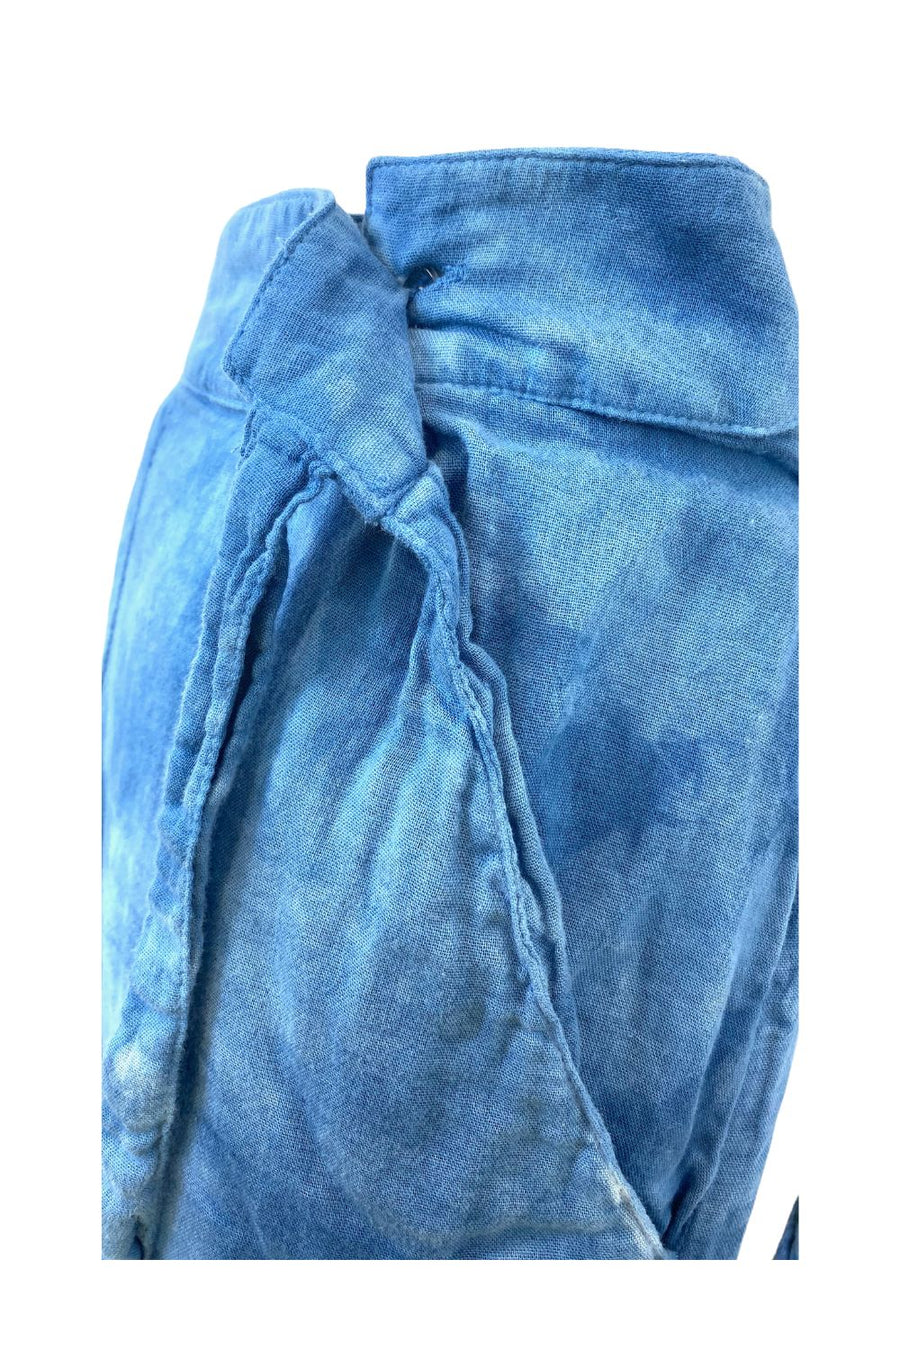 Ida Pant - Flowy Lightweight Pants in Organic Cotton | Indigo Blue